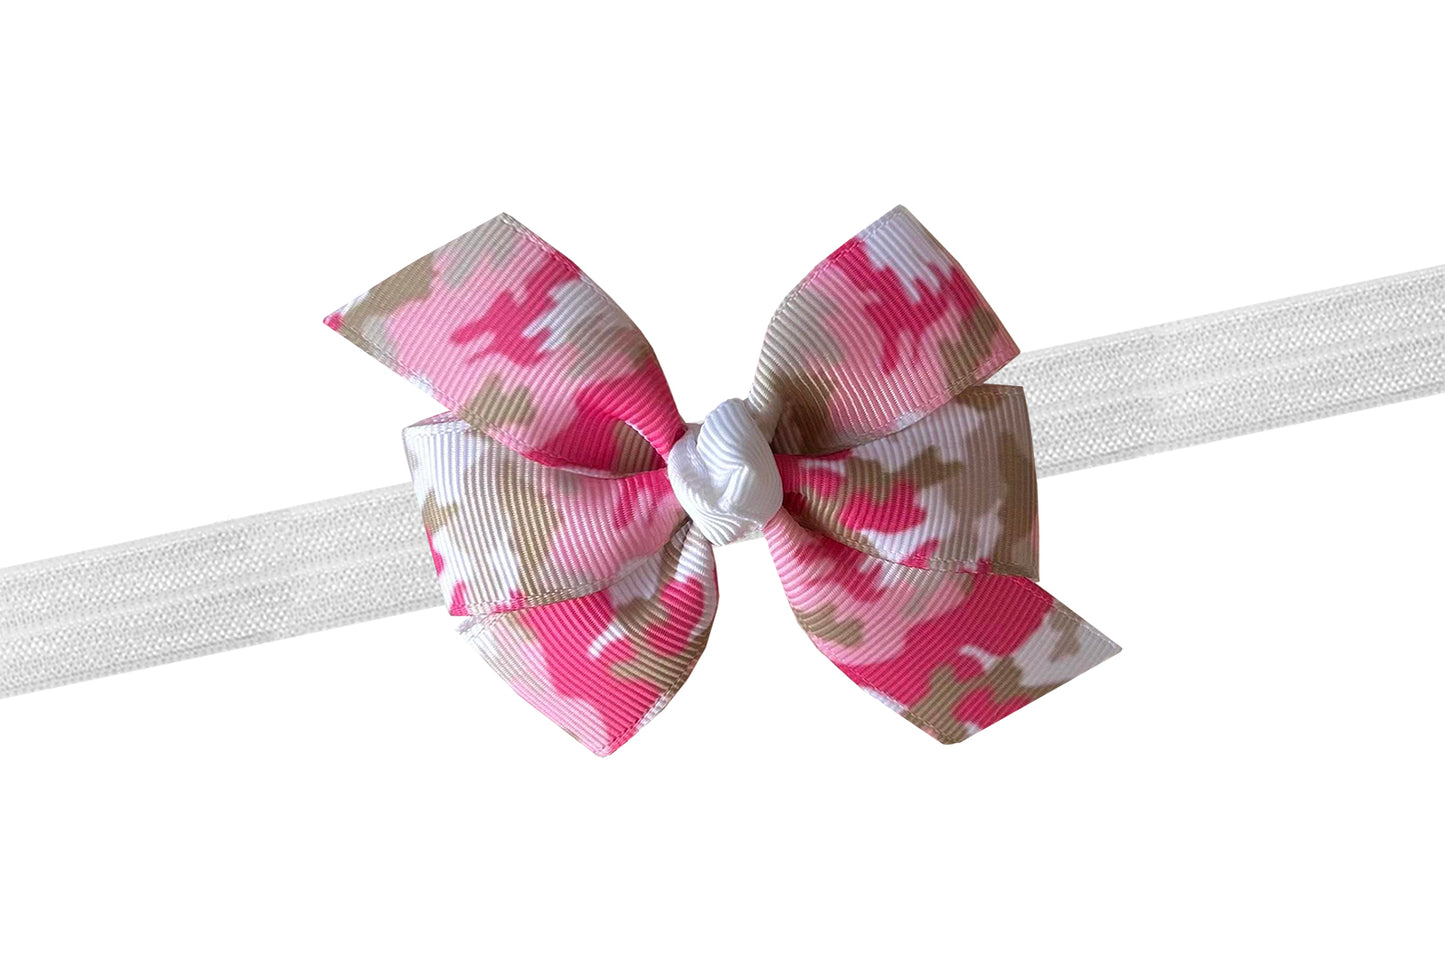 WD2U Baby-Girls Infant 3" Pink Camouflage Camo Hair Bow Stretch Headband